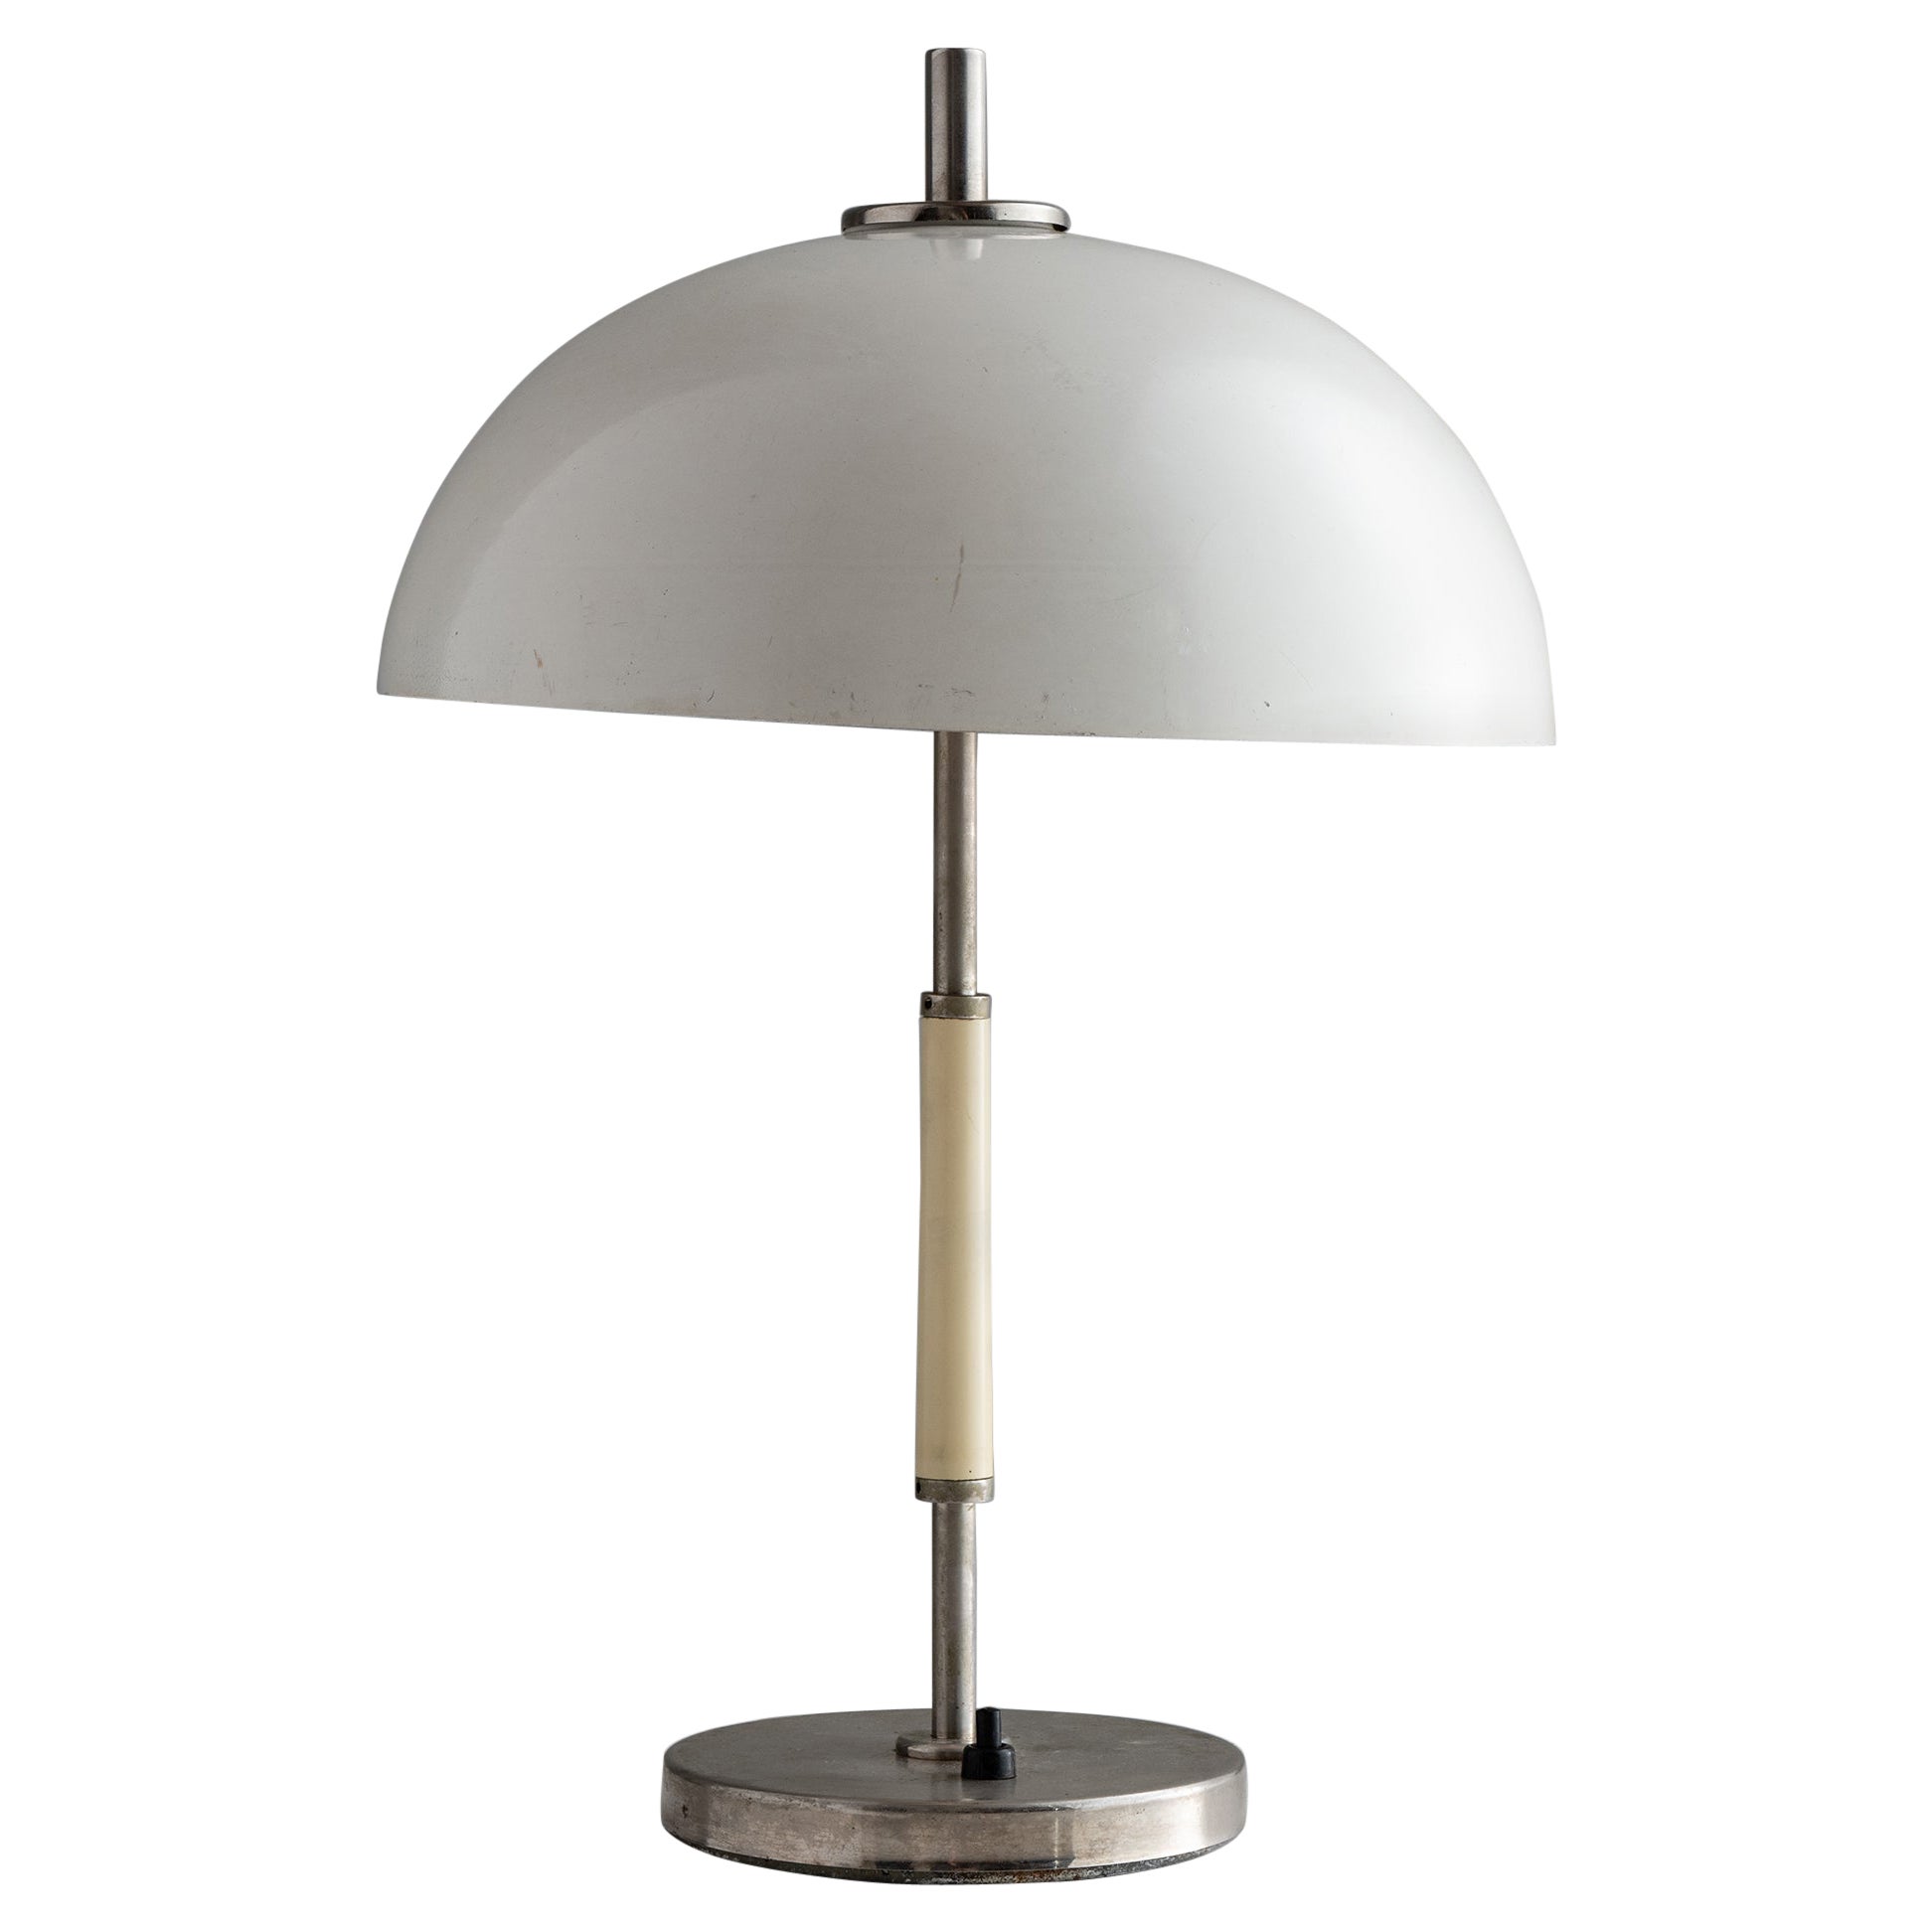 Ceramic Table Lamp At 1stdibs, Adesso 4050 15 Lexington Table Lamp